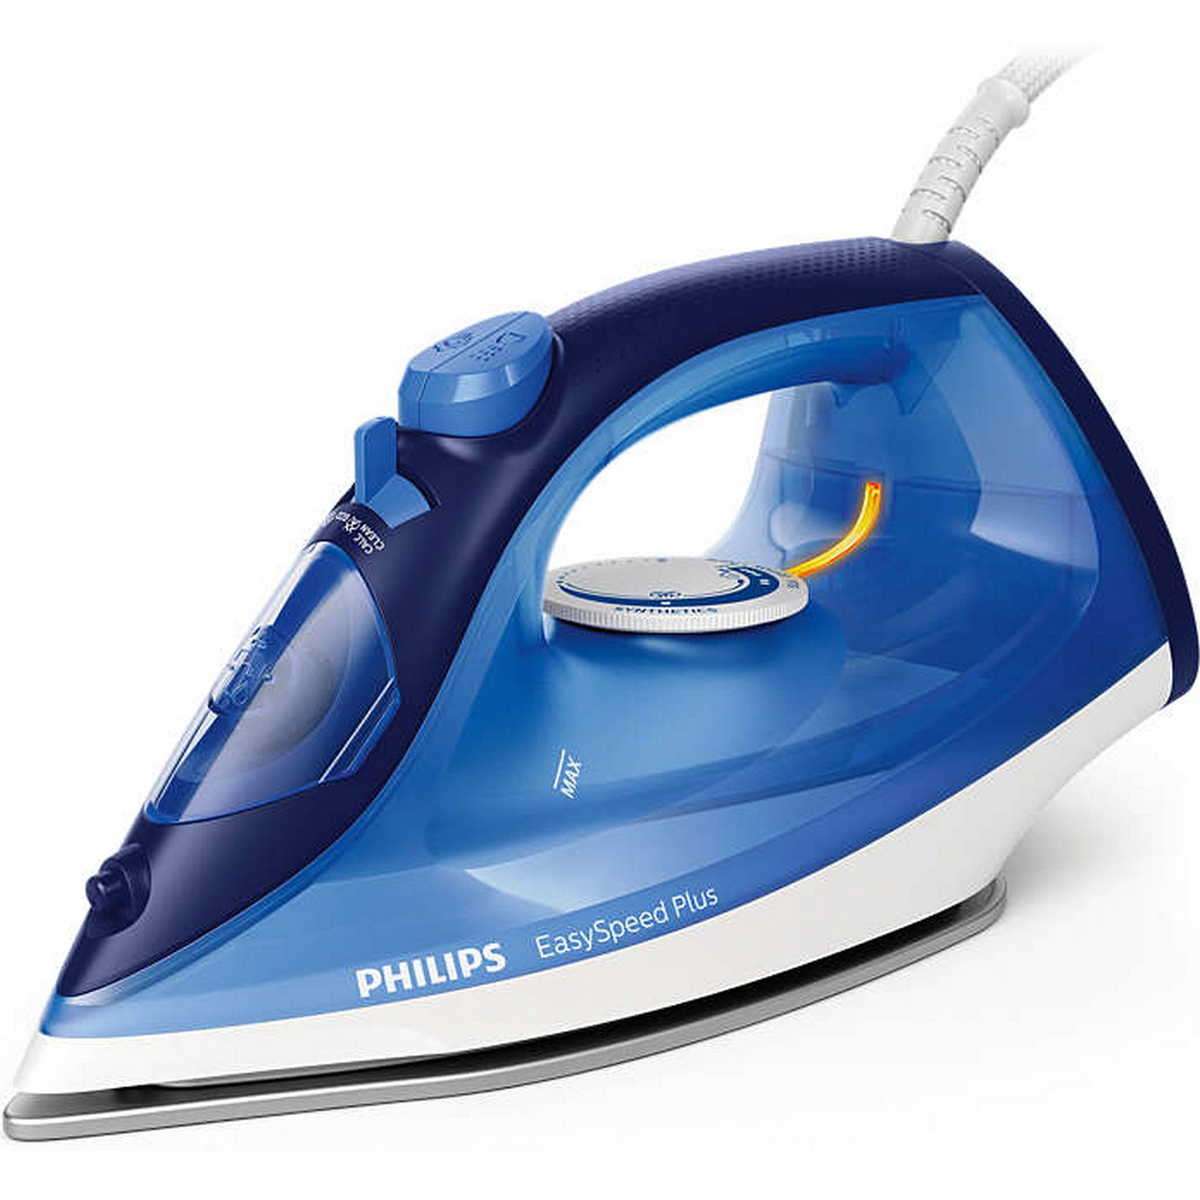  Philips EasySpeed Plus Steam Iron 2100 Watts, Blue, GC2145-26, Blue